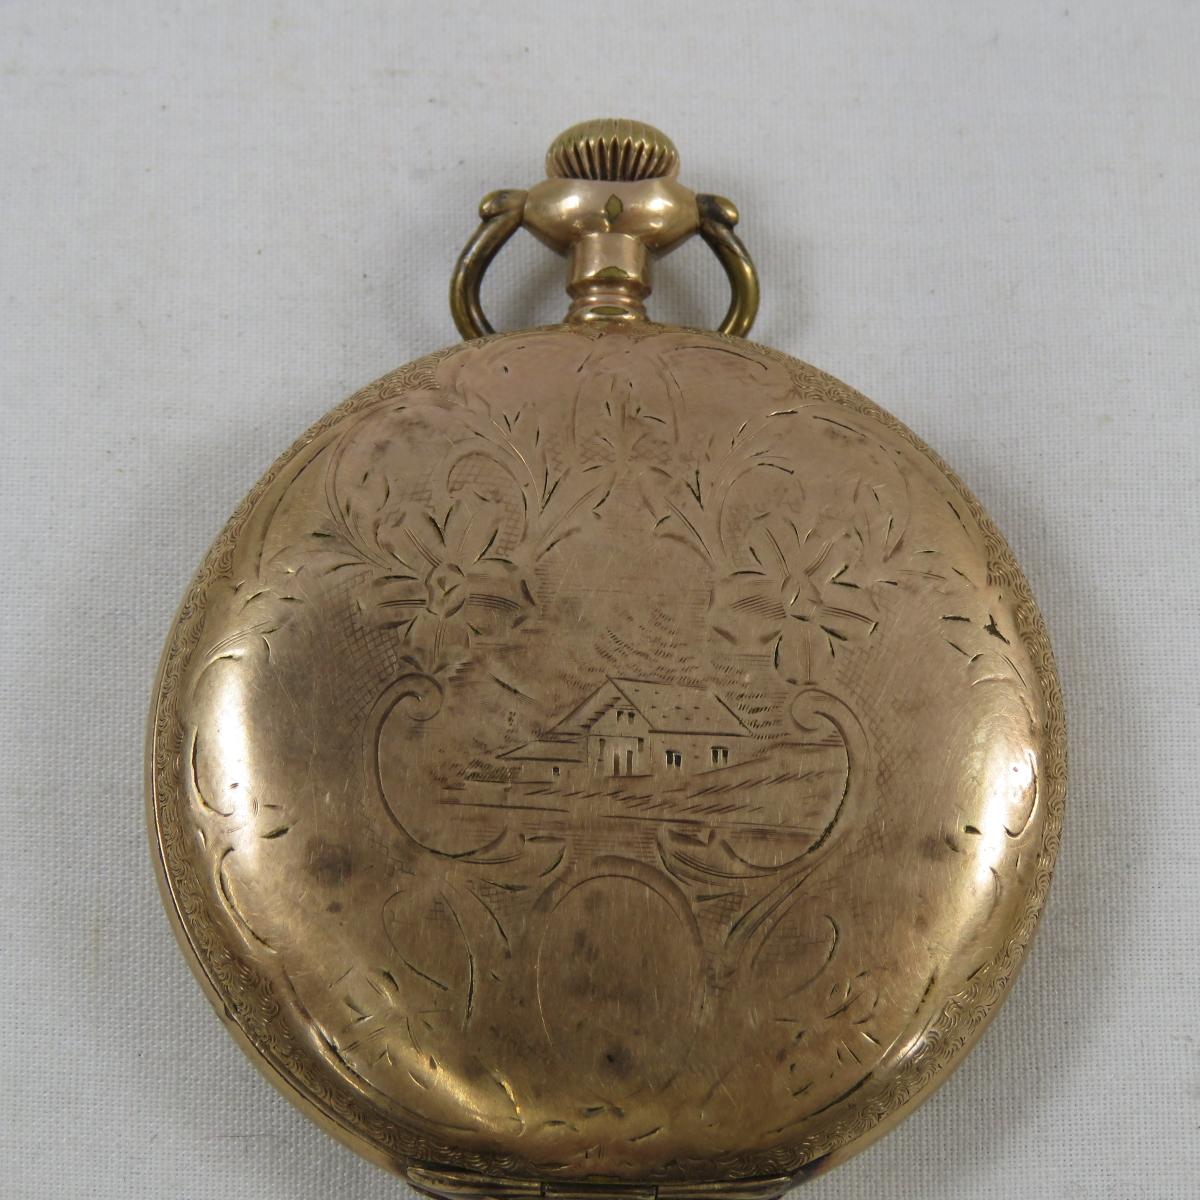 1897 Hamilton W B Sproesser & Debon Pocket Watches